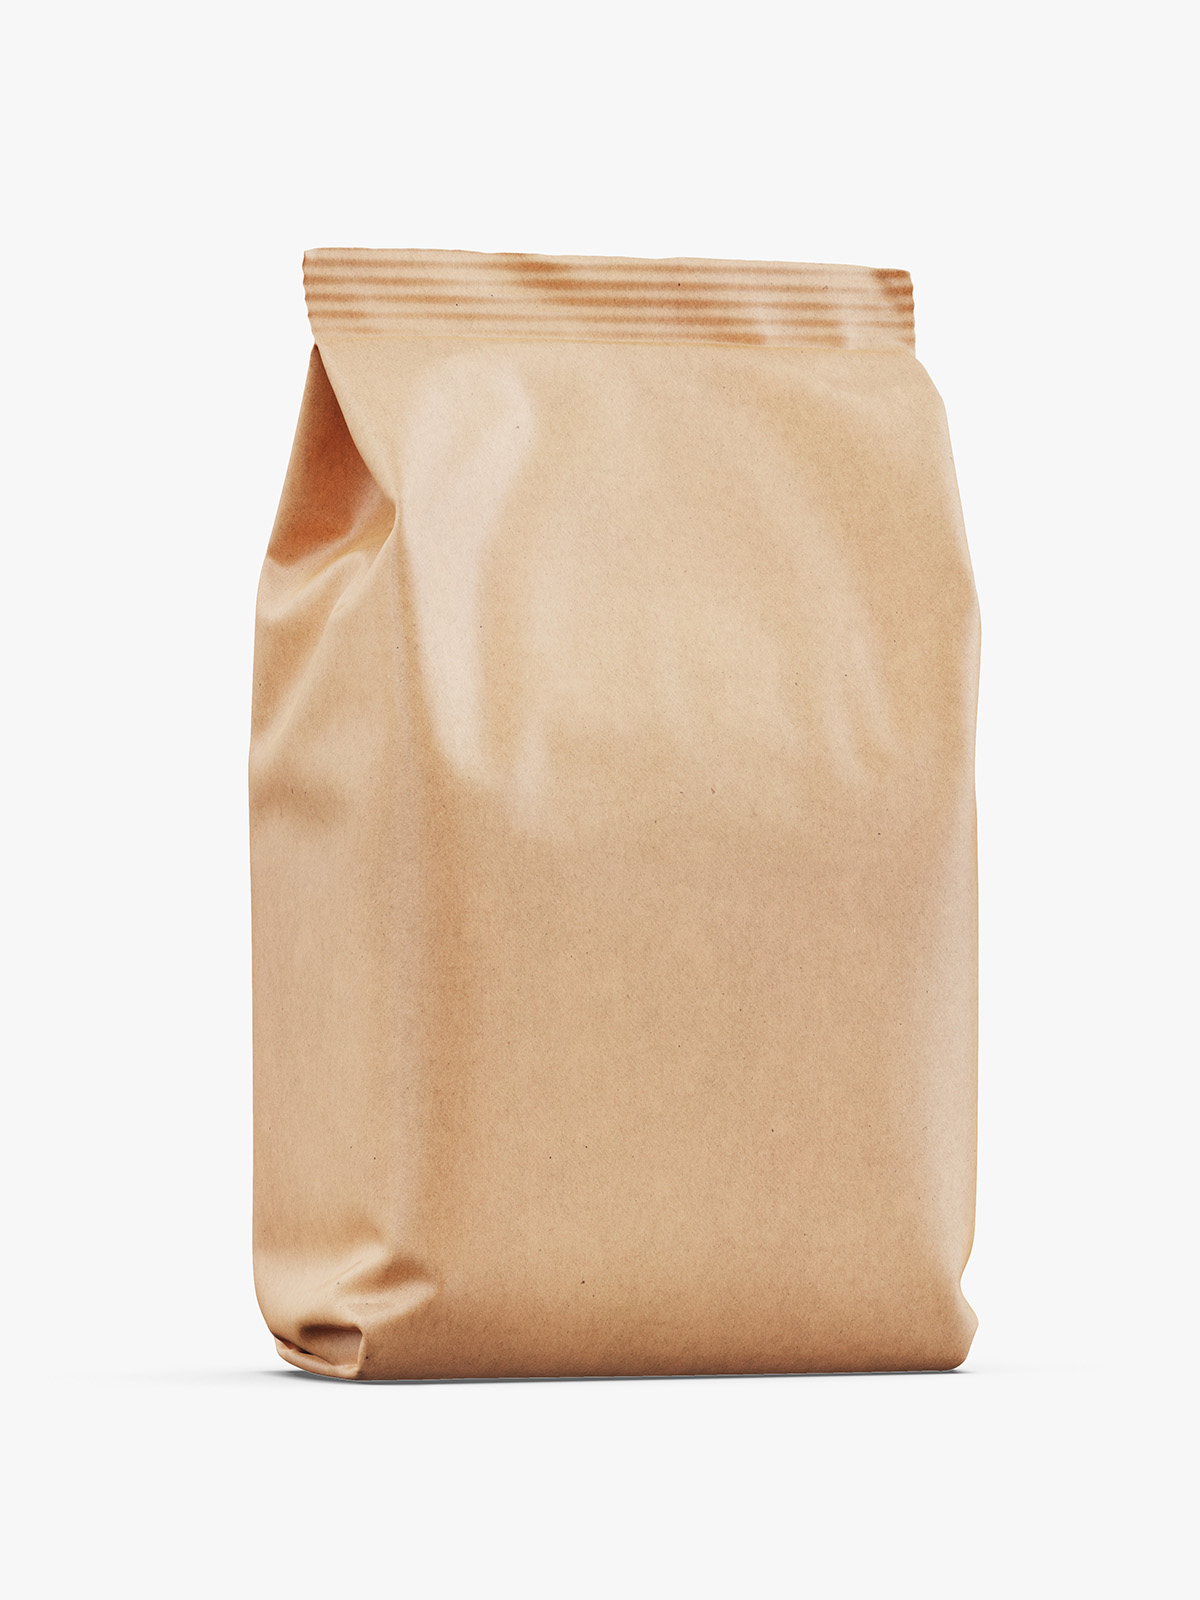 Download Kraft Food Bag With Nuts Mockup